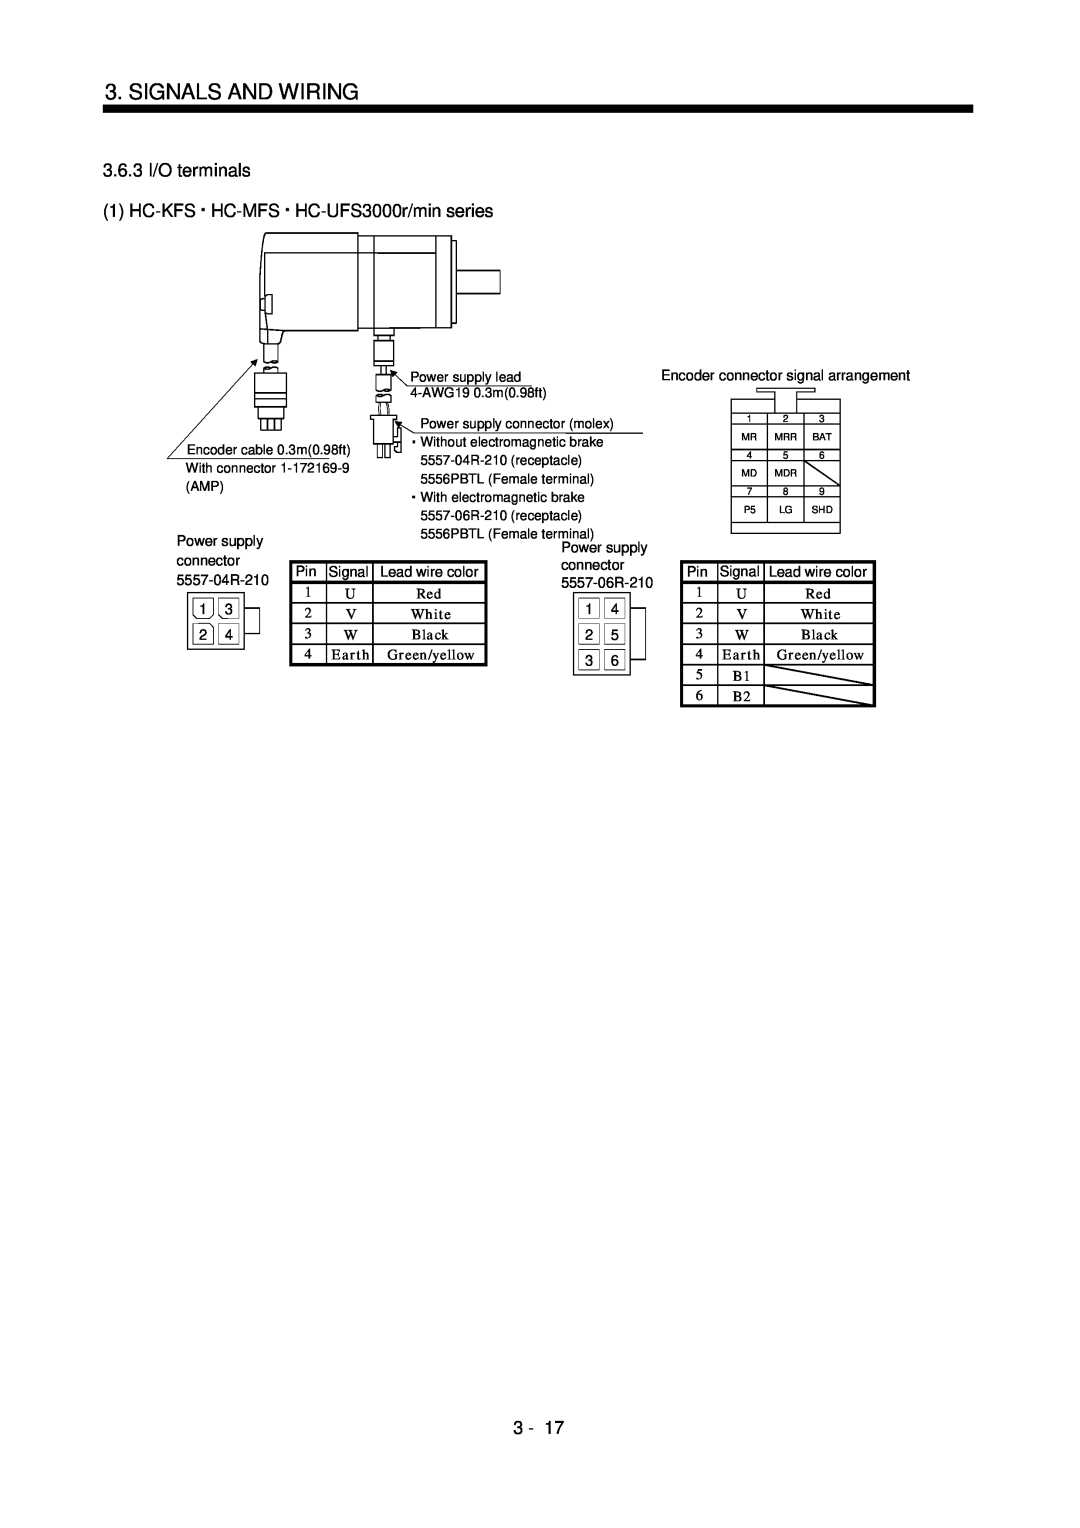 Bose MR-J2S- B instruction manual 3.6.3 I/O terminals, HC-KFS HC-MFS HC-UFS3000r/minseries, Signals And Wiring 